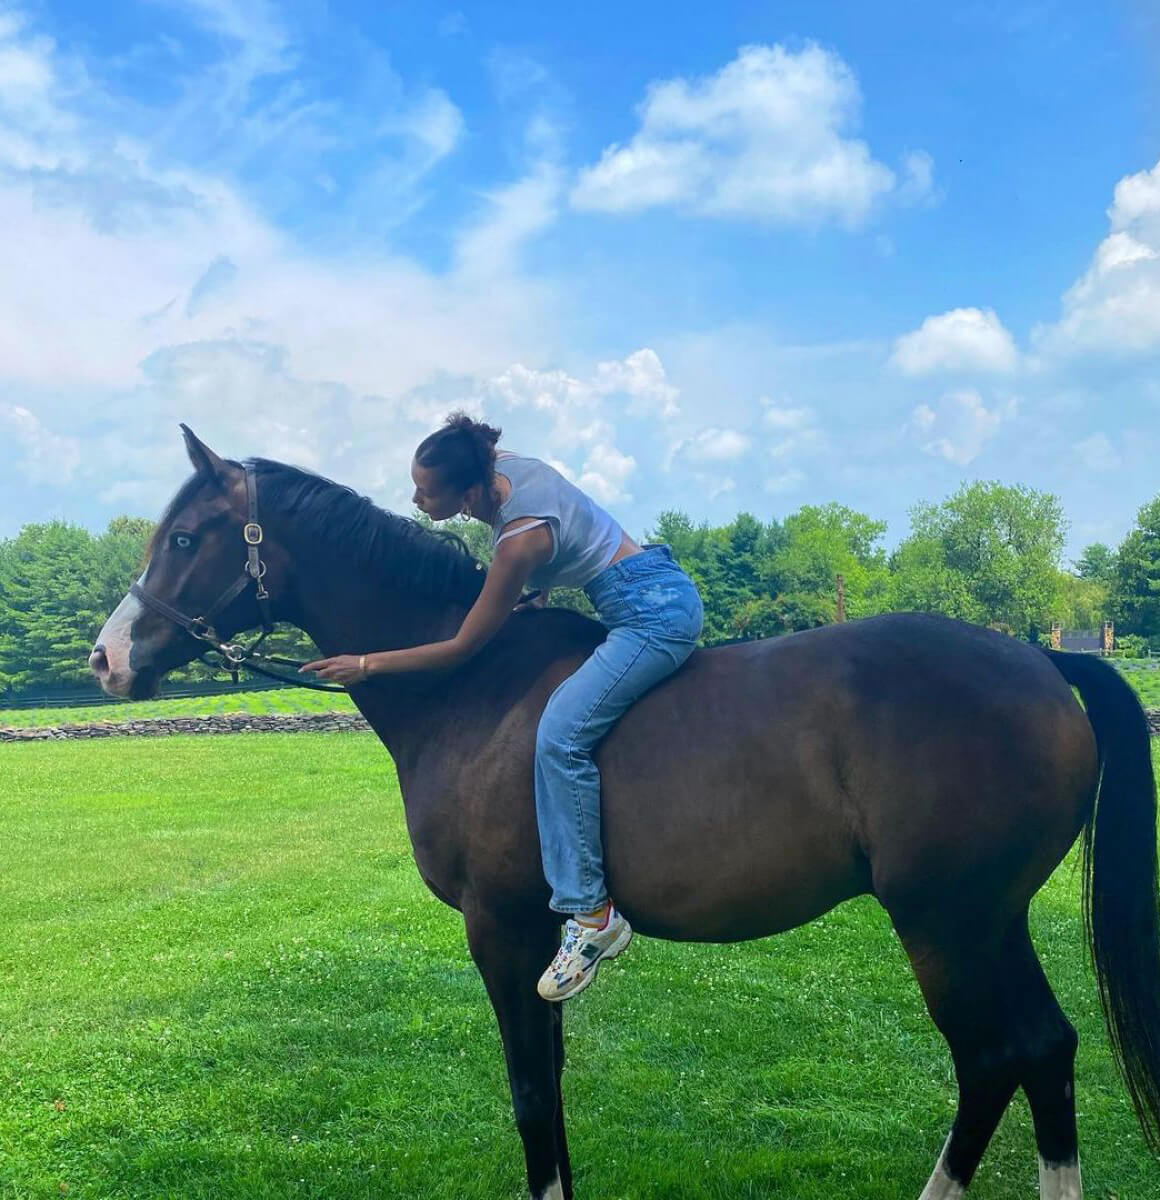 Bella Hadid Riding a Horse - Instagram Photos 12/01/2020